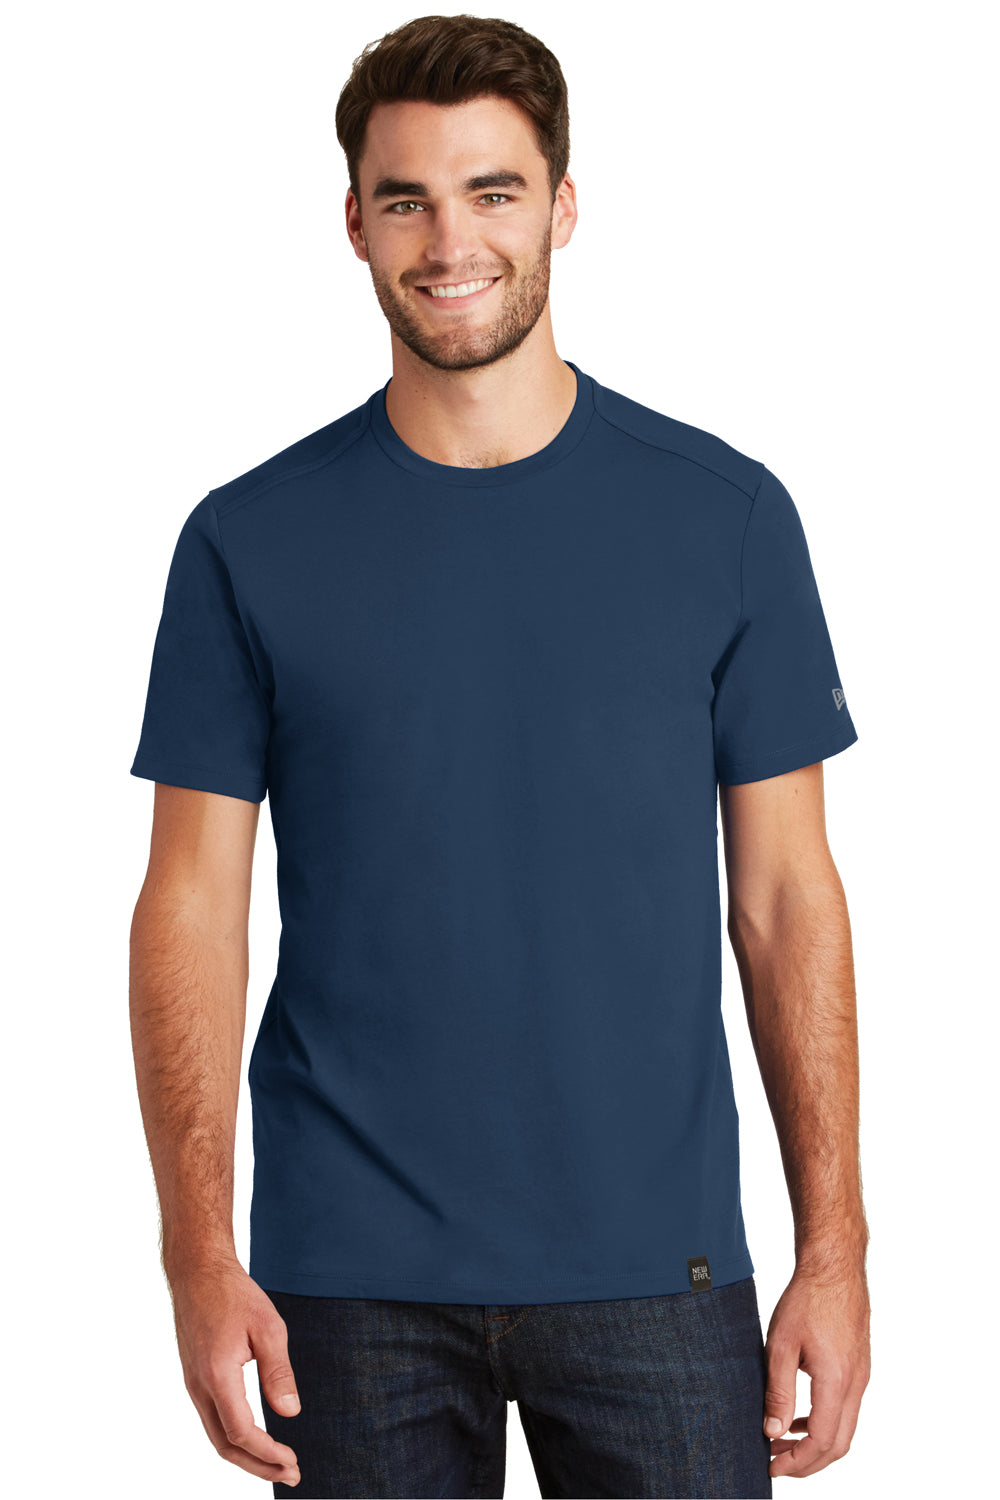 New Era NEA100 Mens Heritage Short Sleeve Crewneck T-Shirt Dark Royal Blue Front